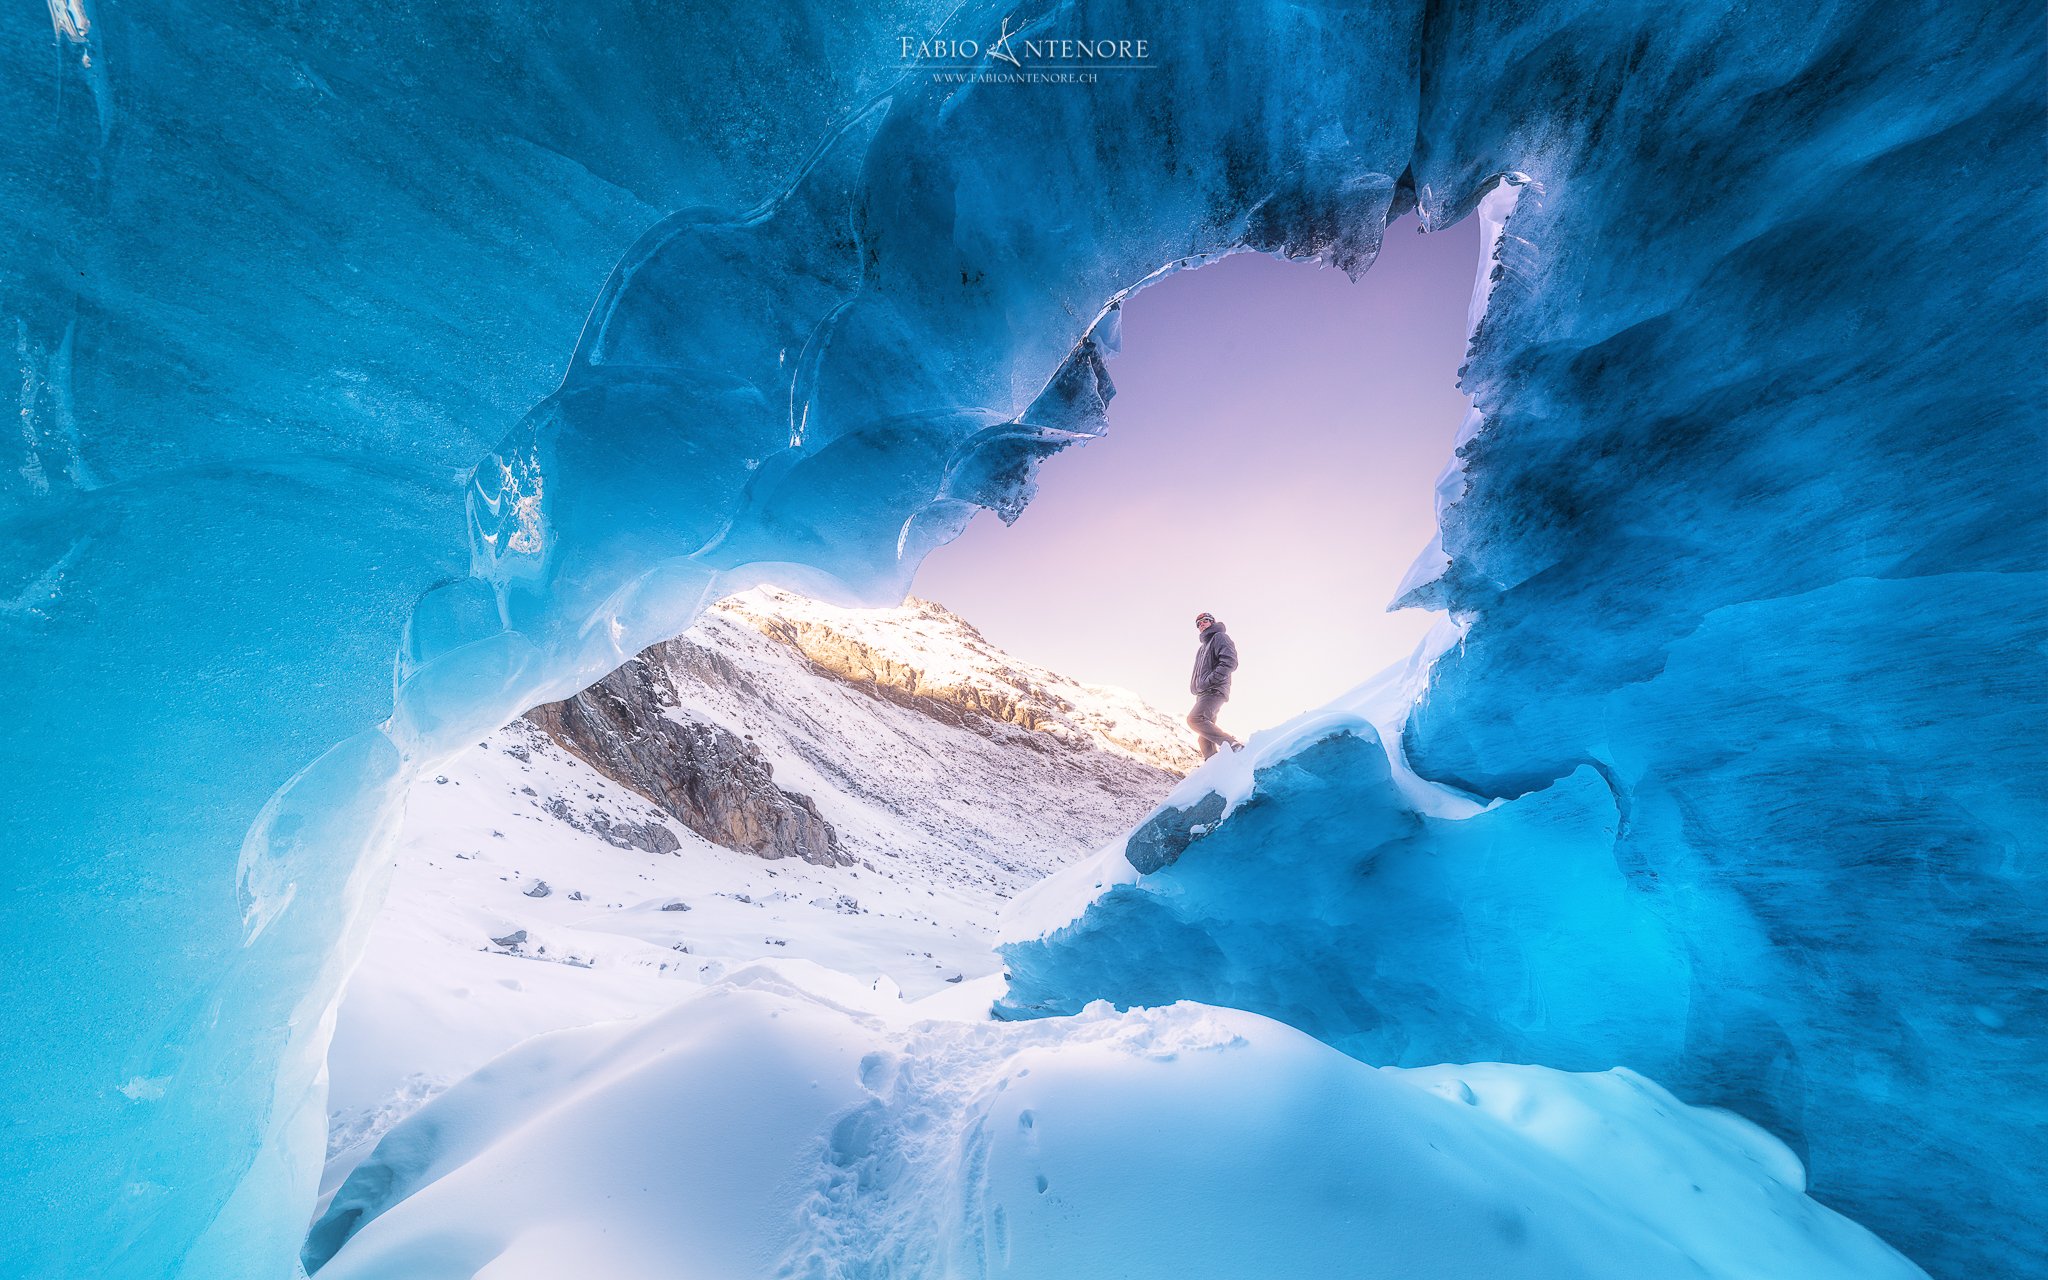 Faszination Gletschergrotte Februar 2018